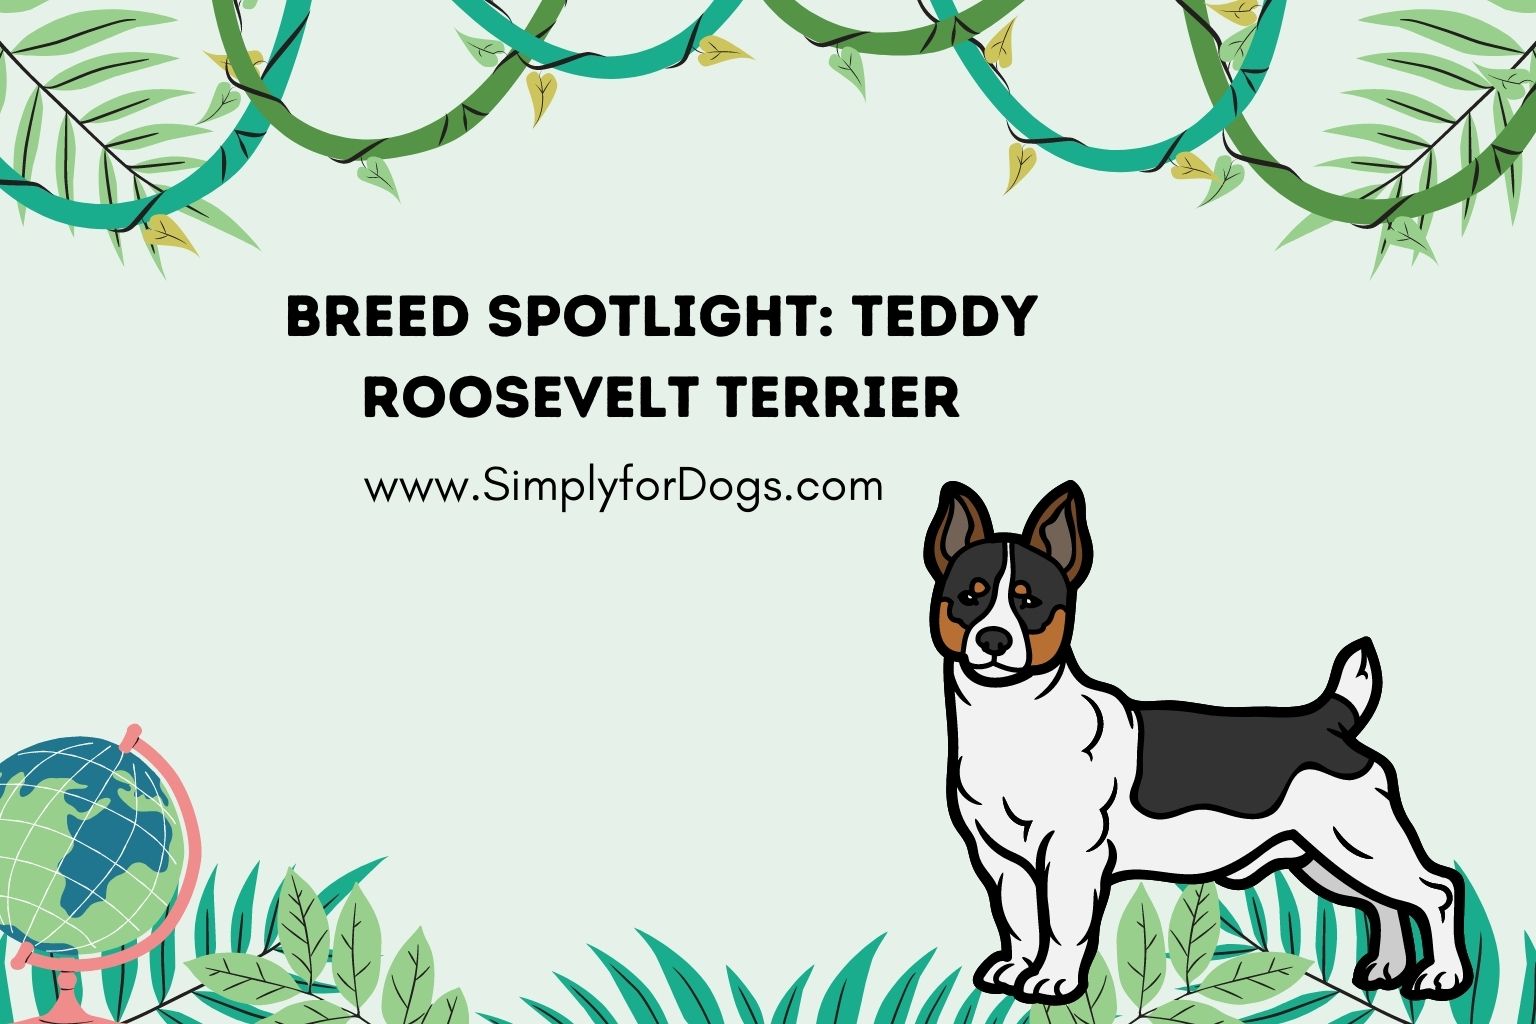 Teddy Roosevelt Terrier